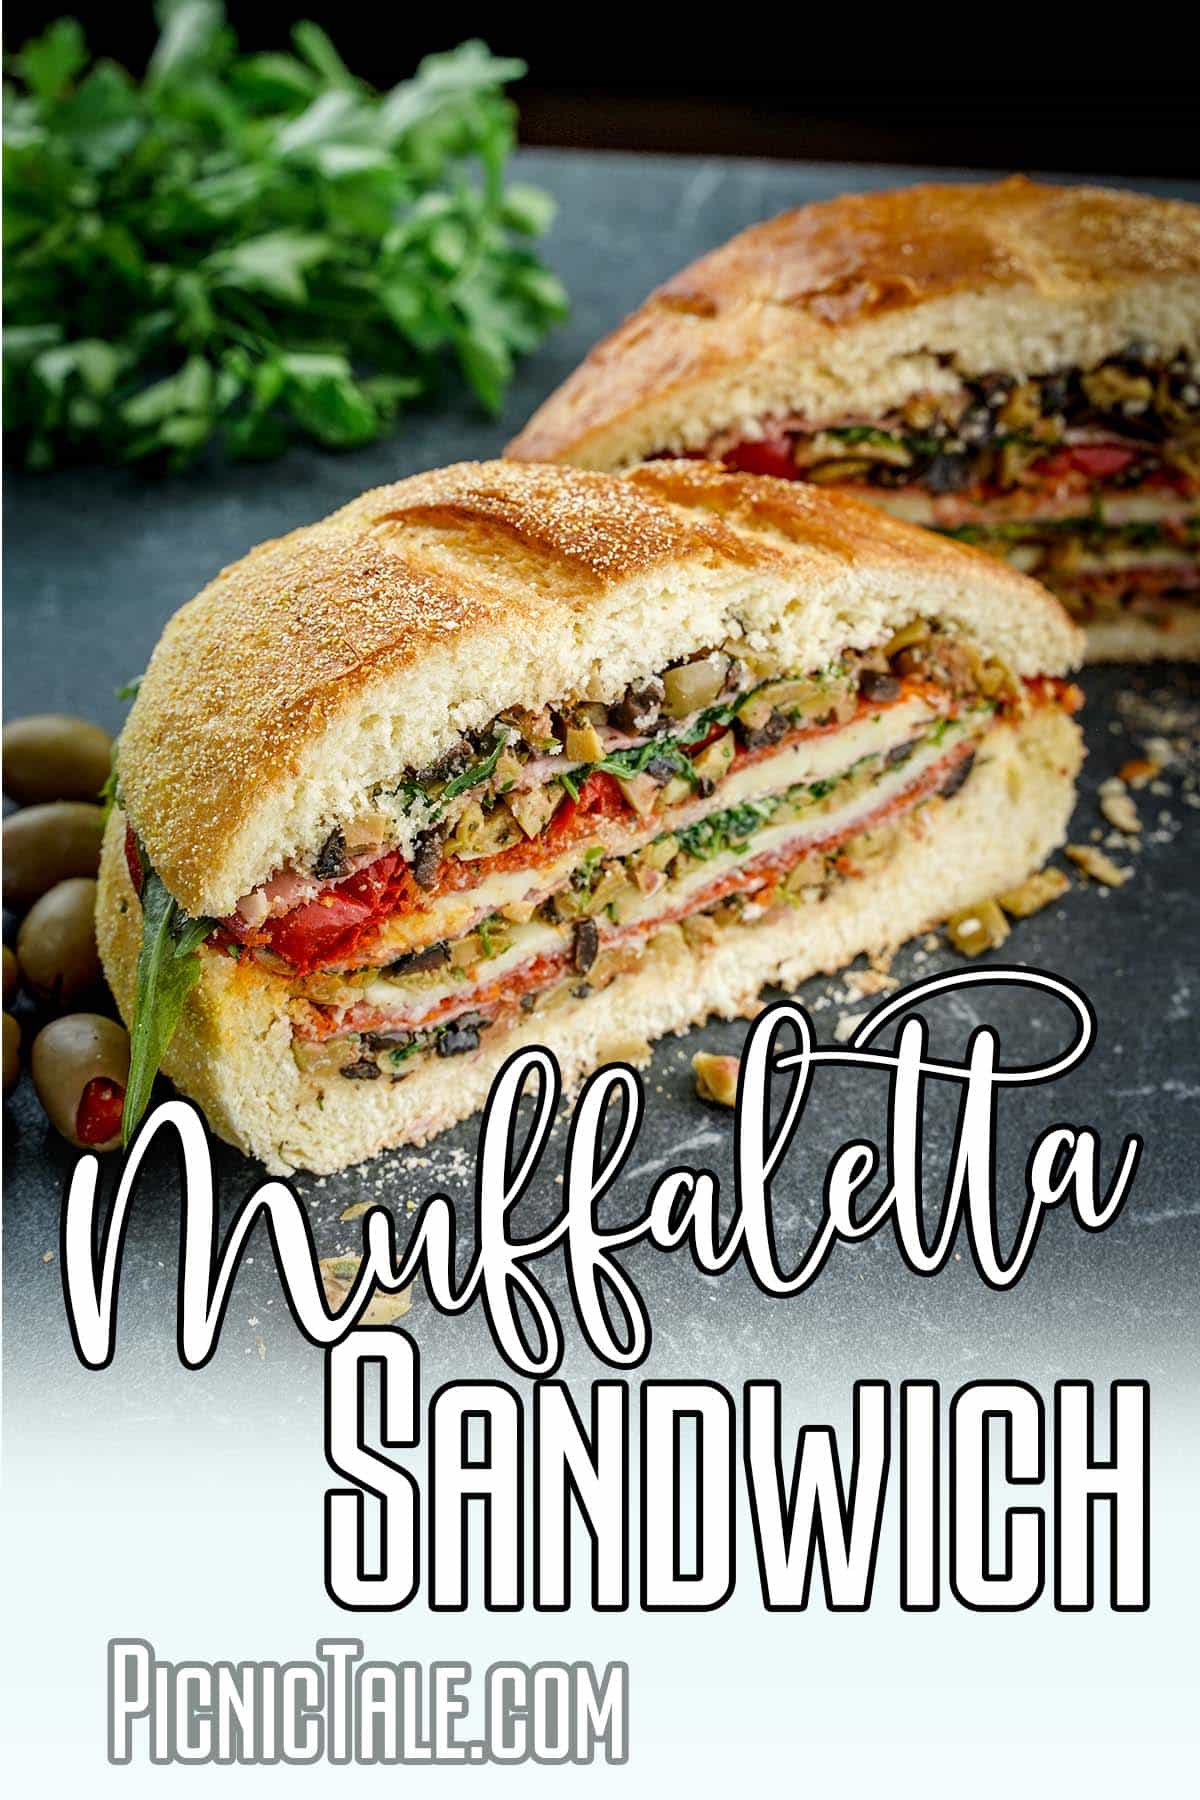 Muffaletta Sandwich, wording on bottom.